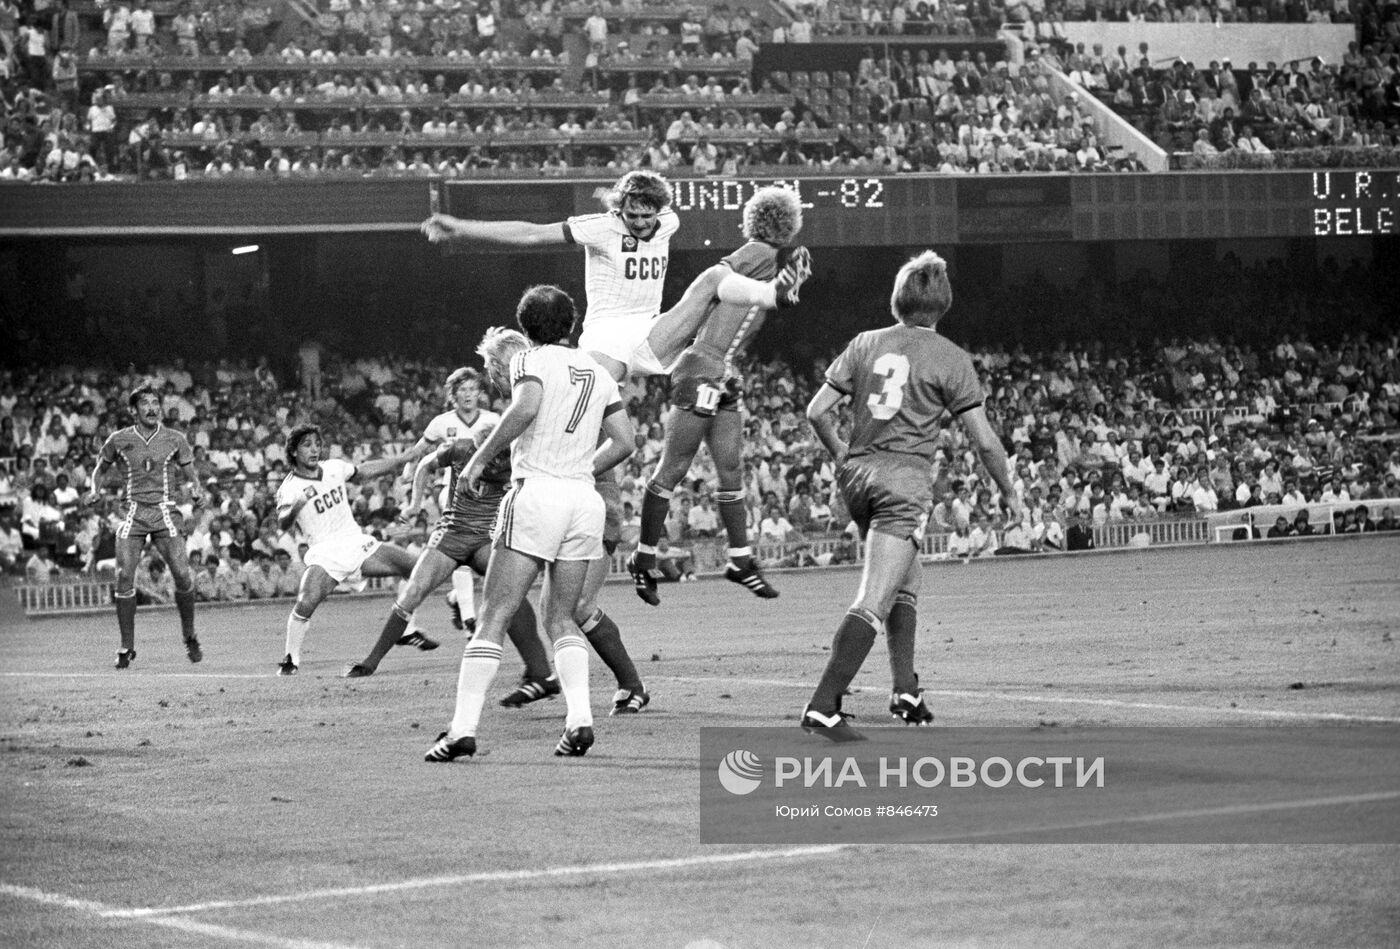 Матч Бельгия - СССР чемпионата мира по футболу 1982